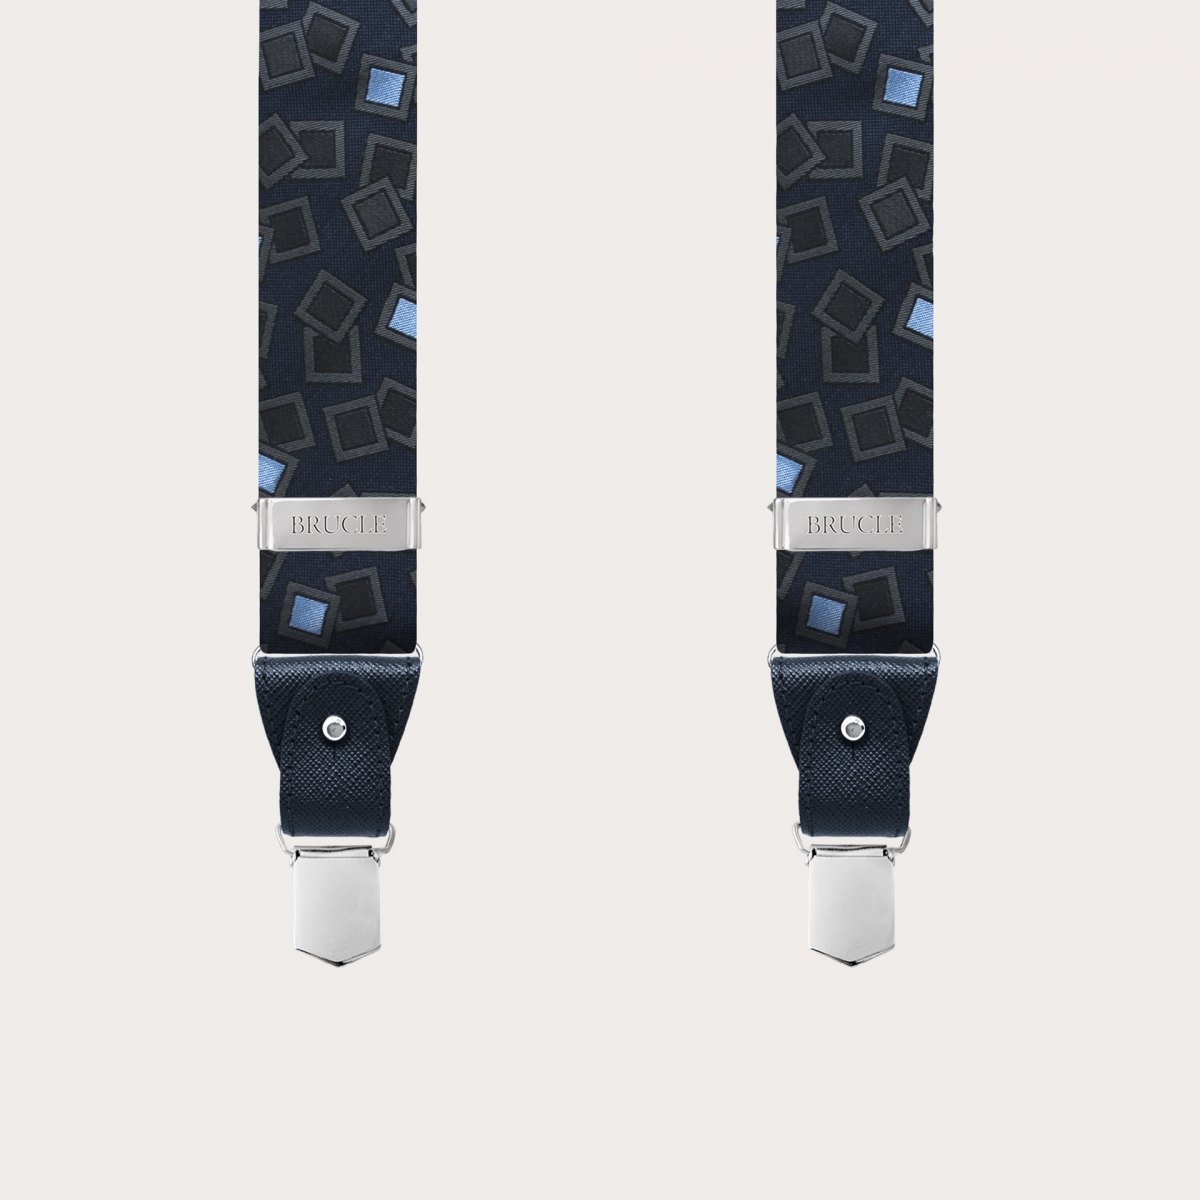 BRUCLE Hosenträger aus Jacquard-Seide, marineblau mit anthrazitfarbenem und hellblauem Muster